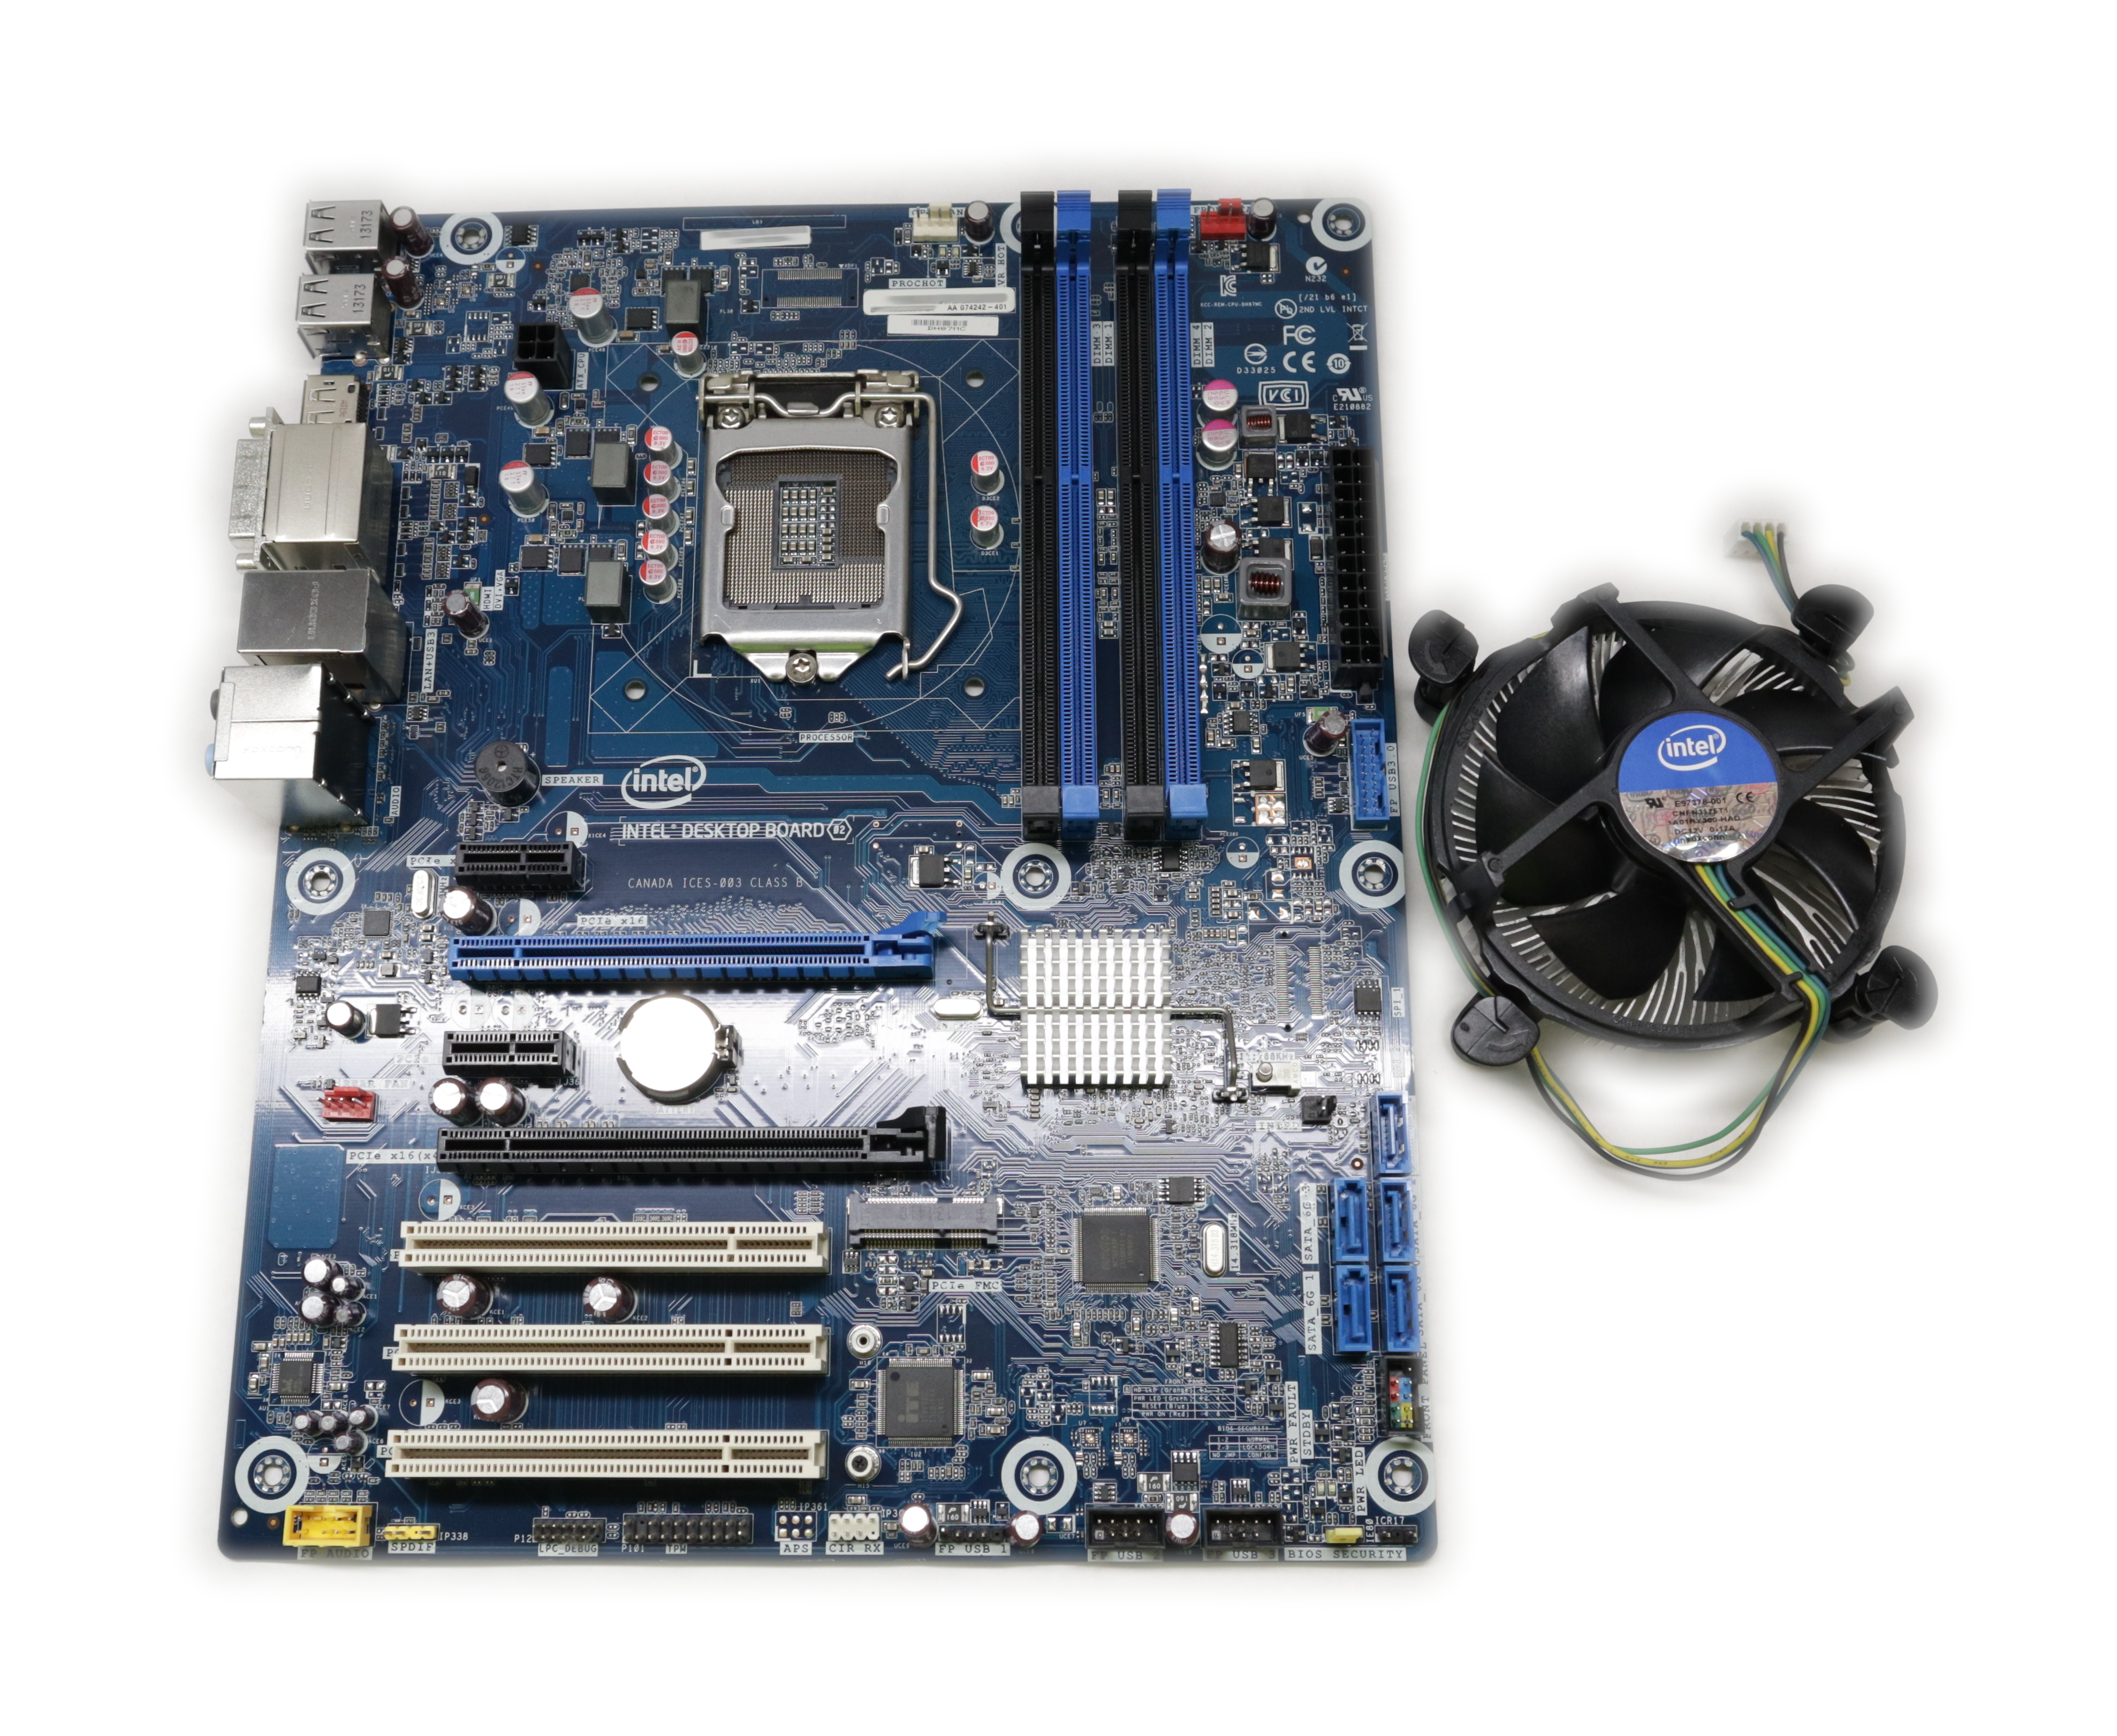 Intel DH87MC Desktop Motherboard H8 LGA1150 DDR3 G74242-401 with Cooler